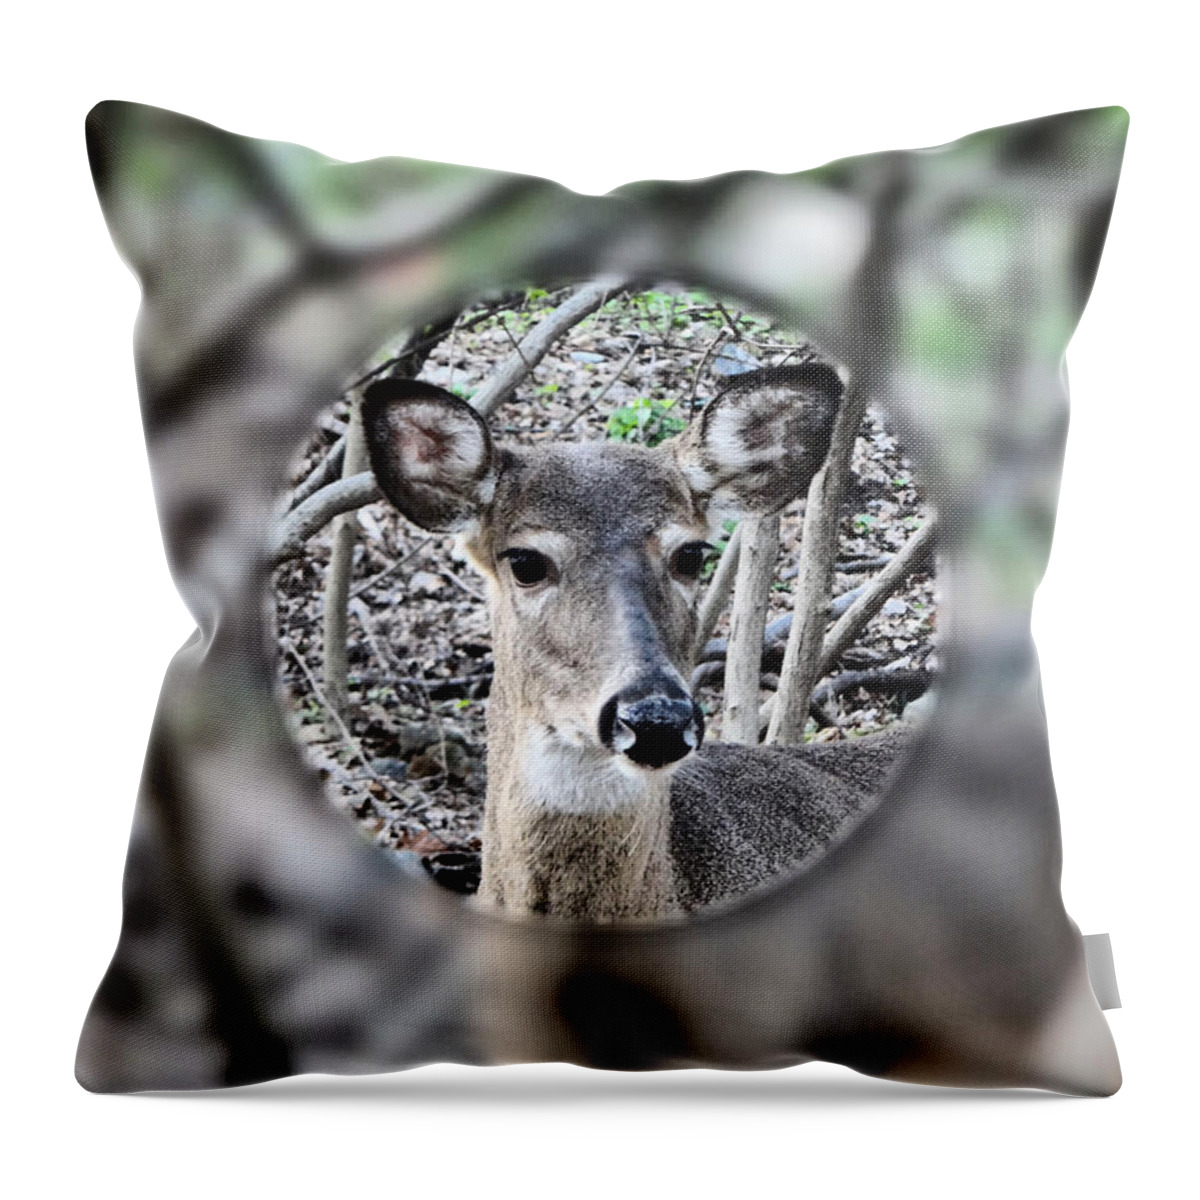 Deer Throw Pillow featuring the photograph Deer Hunter's View by Russel Considine